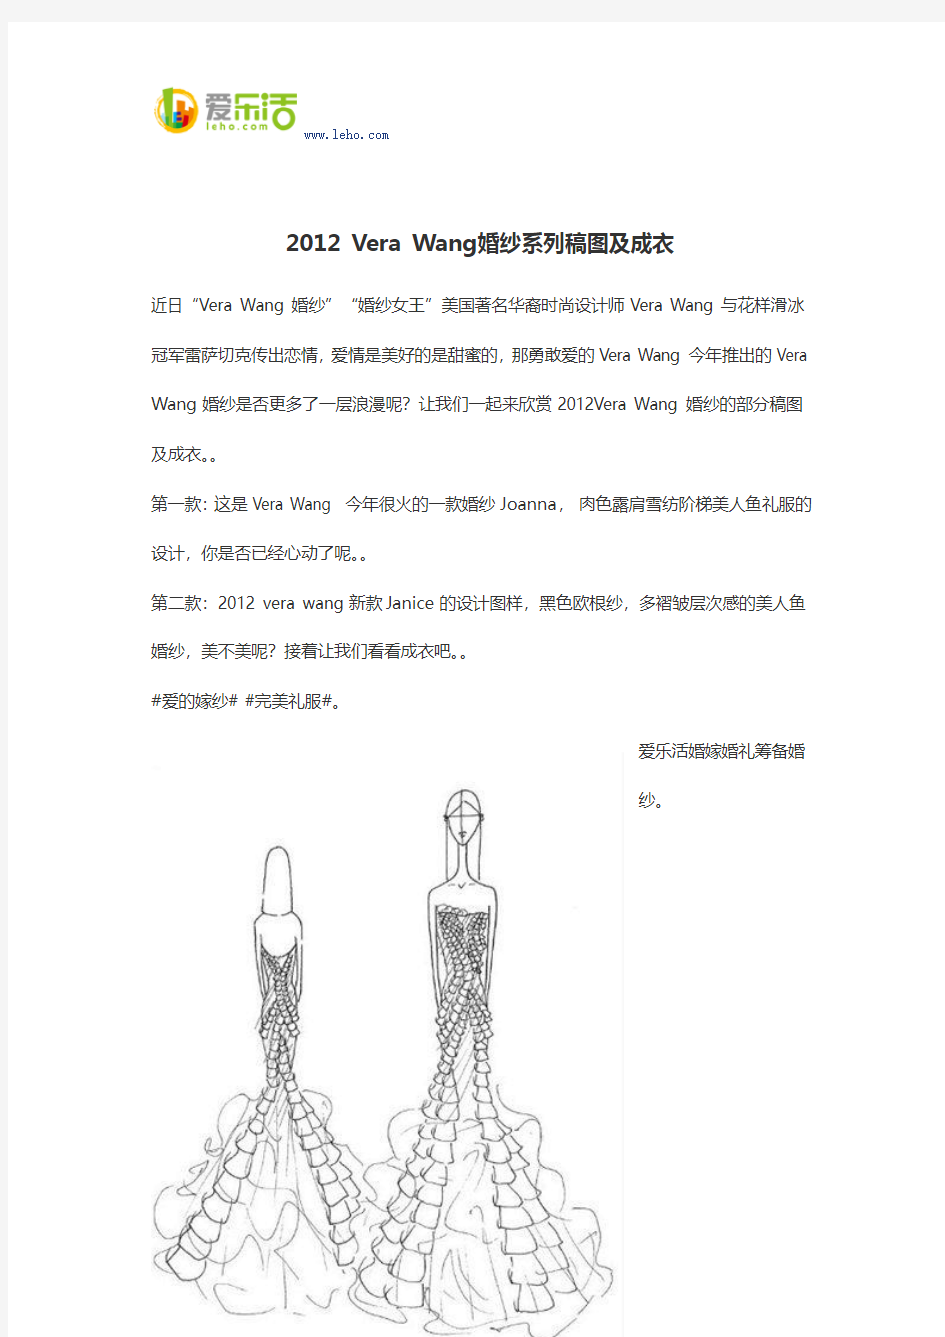 2012 Vera Wang婚纱系列稿图及成衣